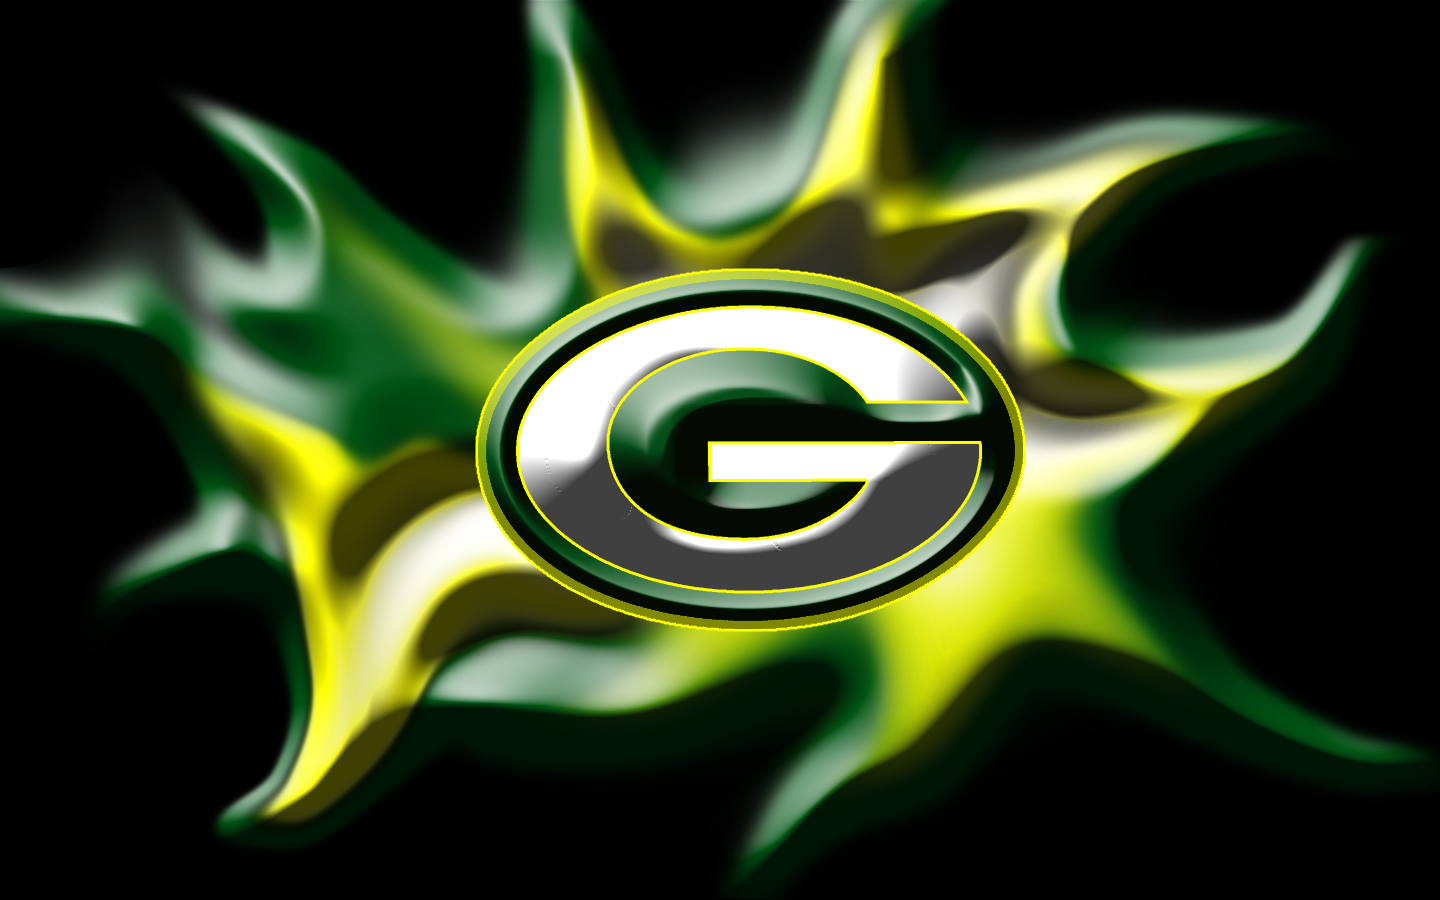 Greenbay Packers Football Team NFL 4K wallpaper download